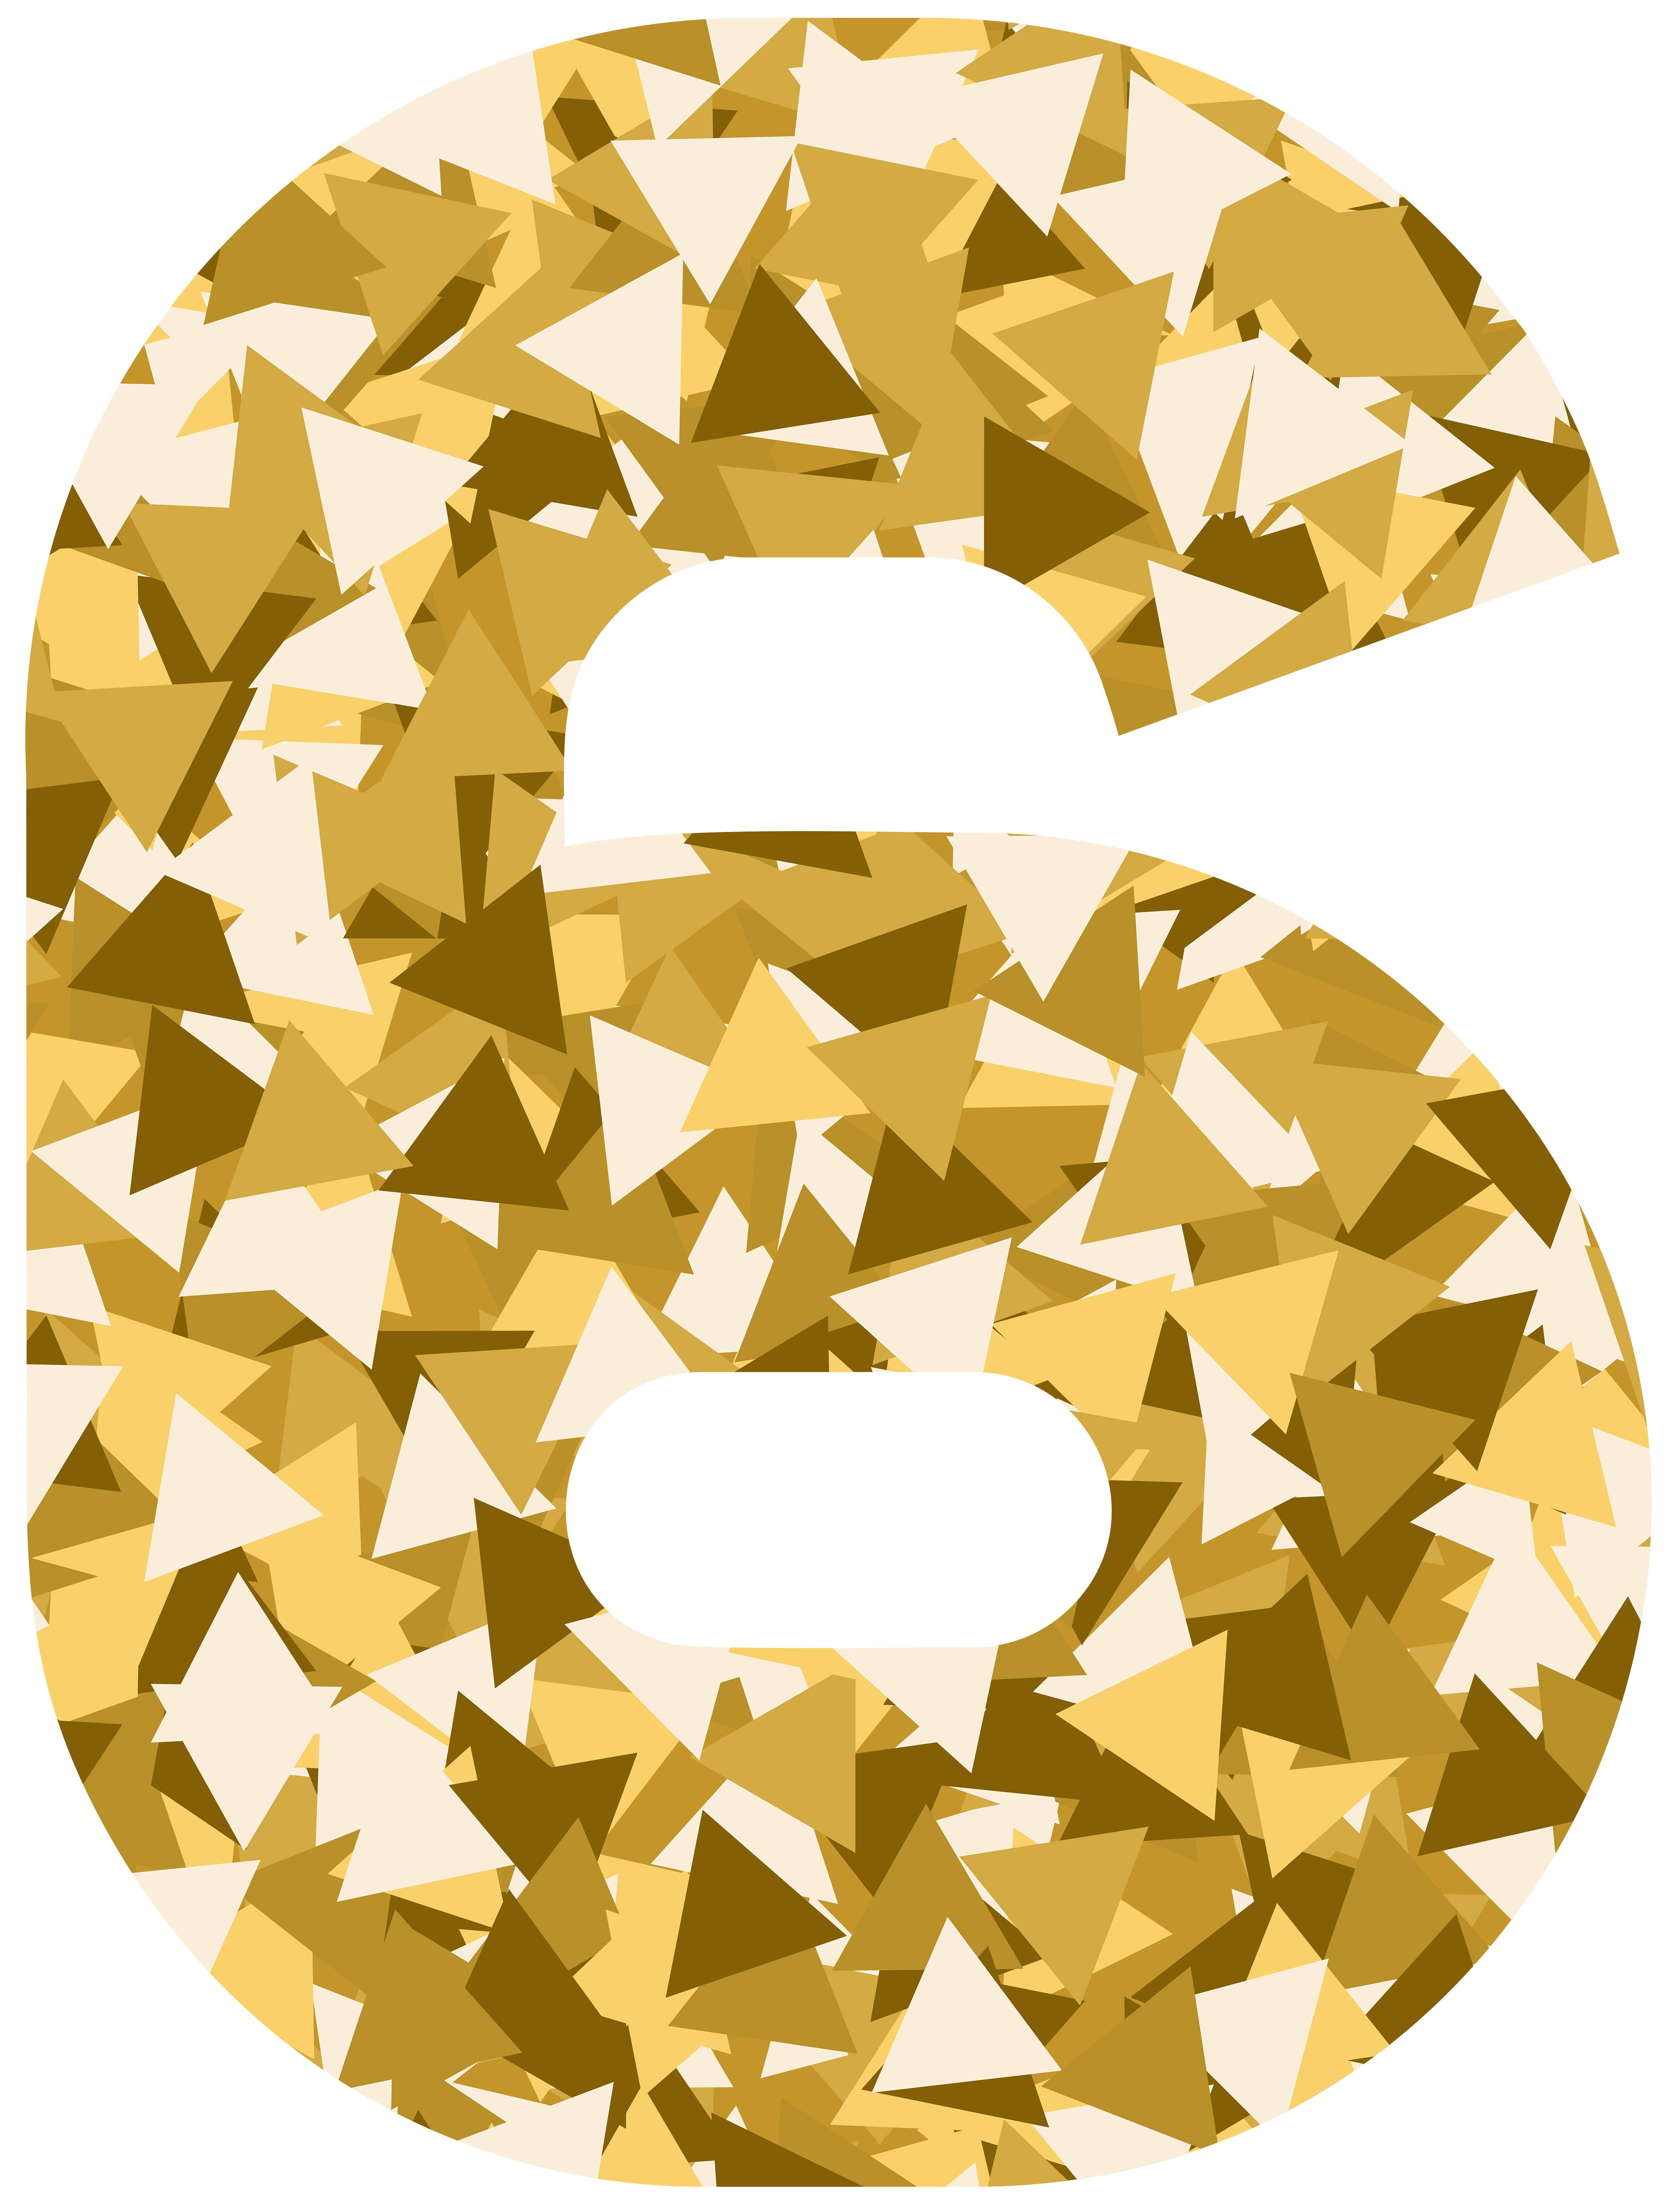 number clipart diamond